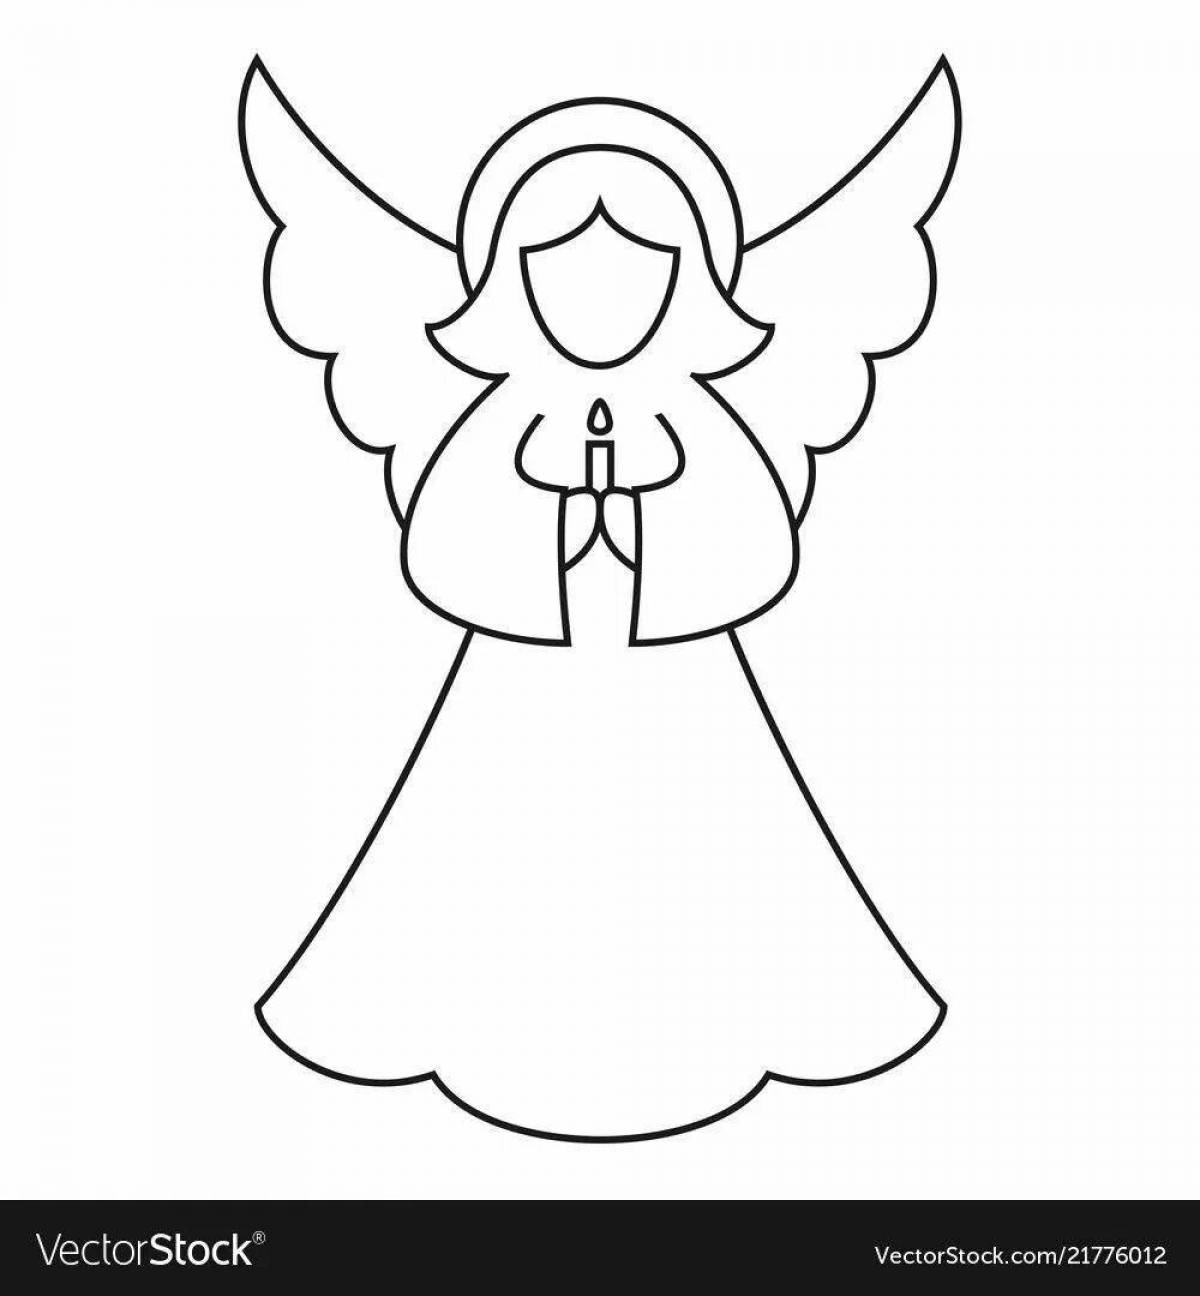 Sky christmas angel coloring page